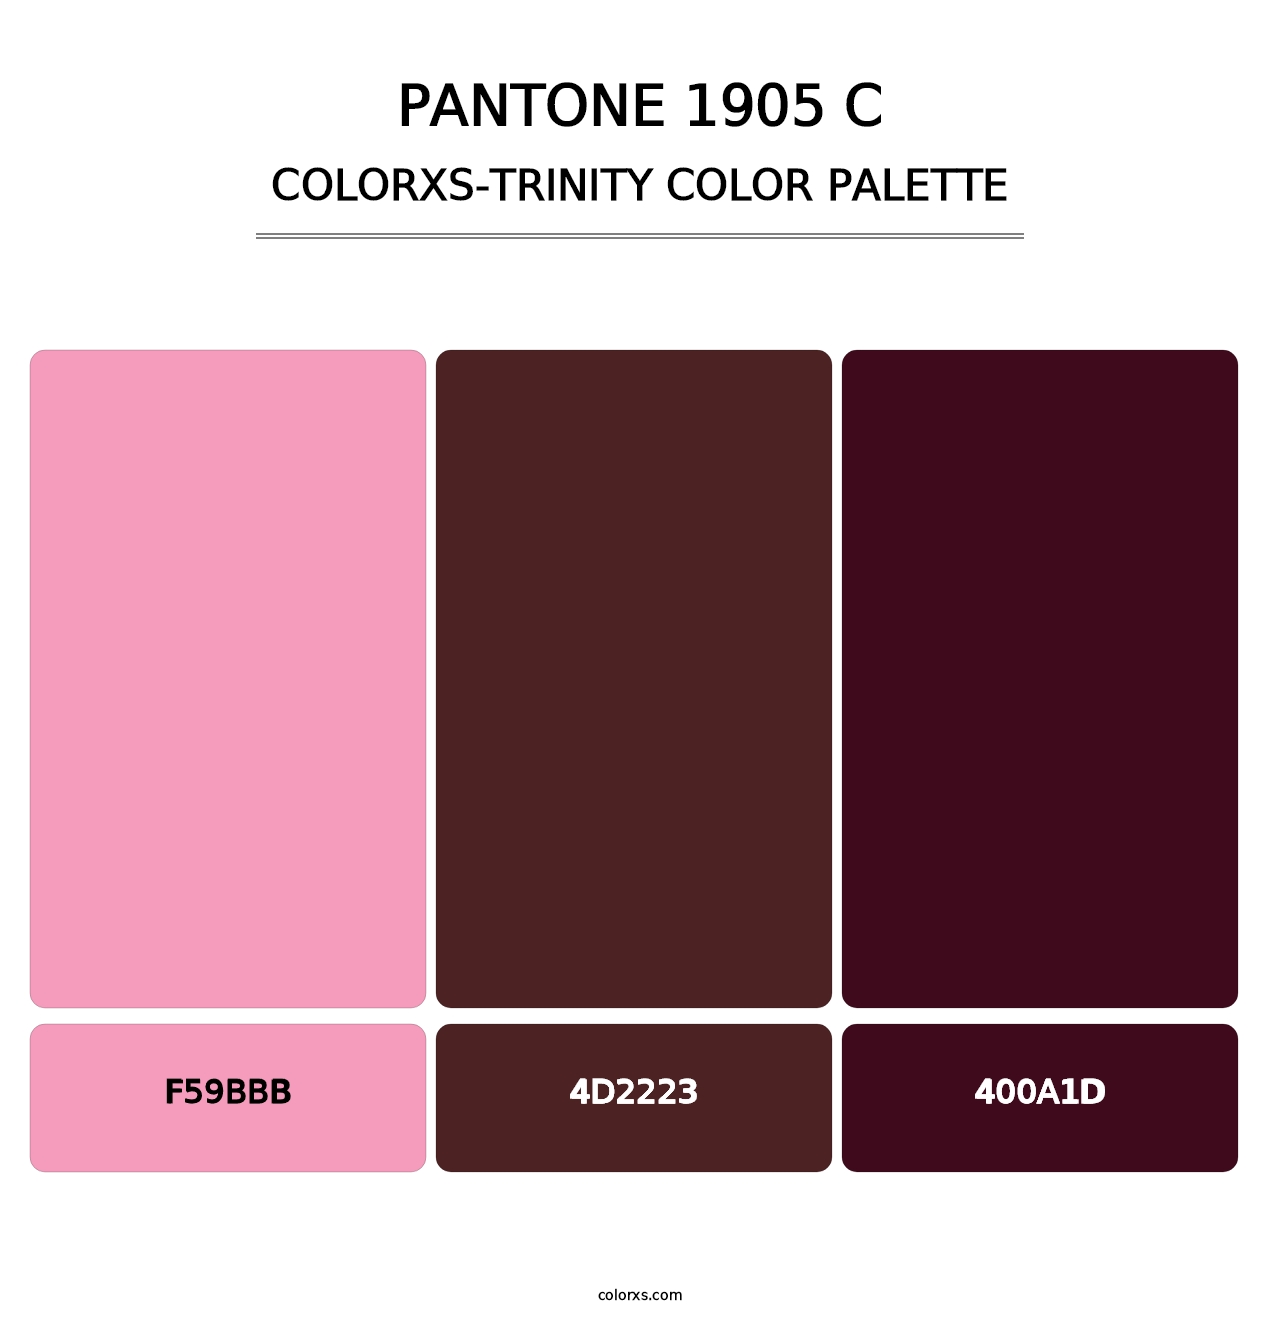 PANTONE 1905 C - Colorxs Trinity Palette